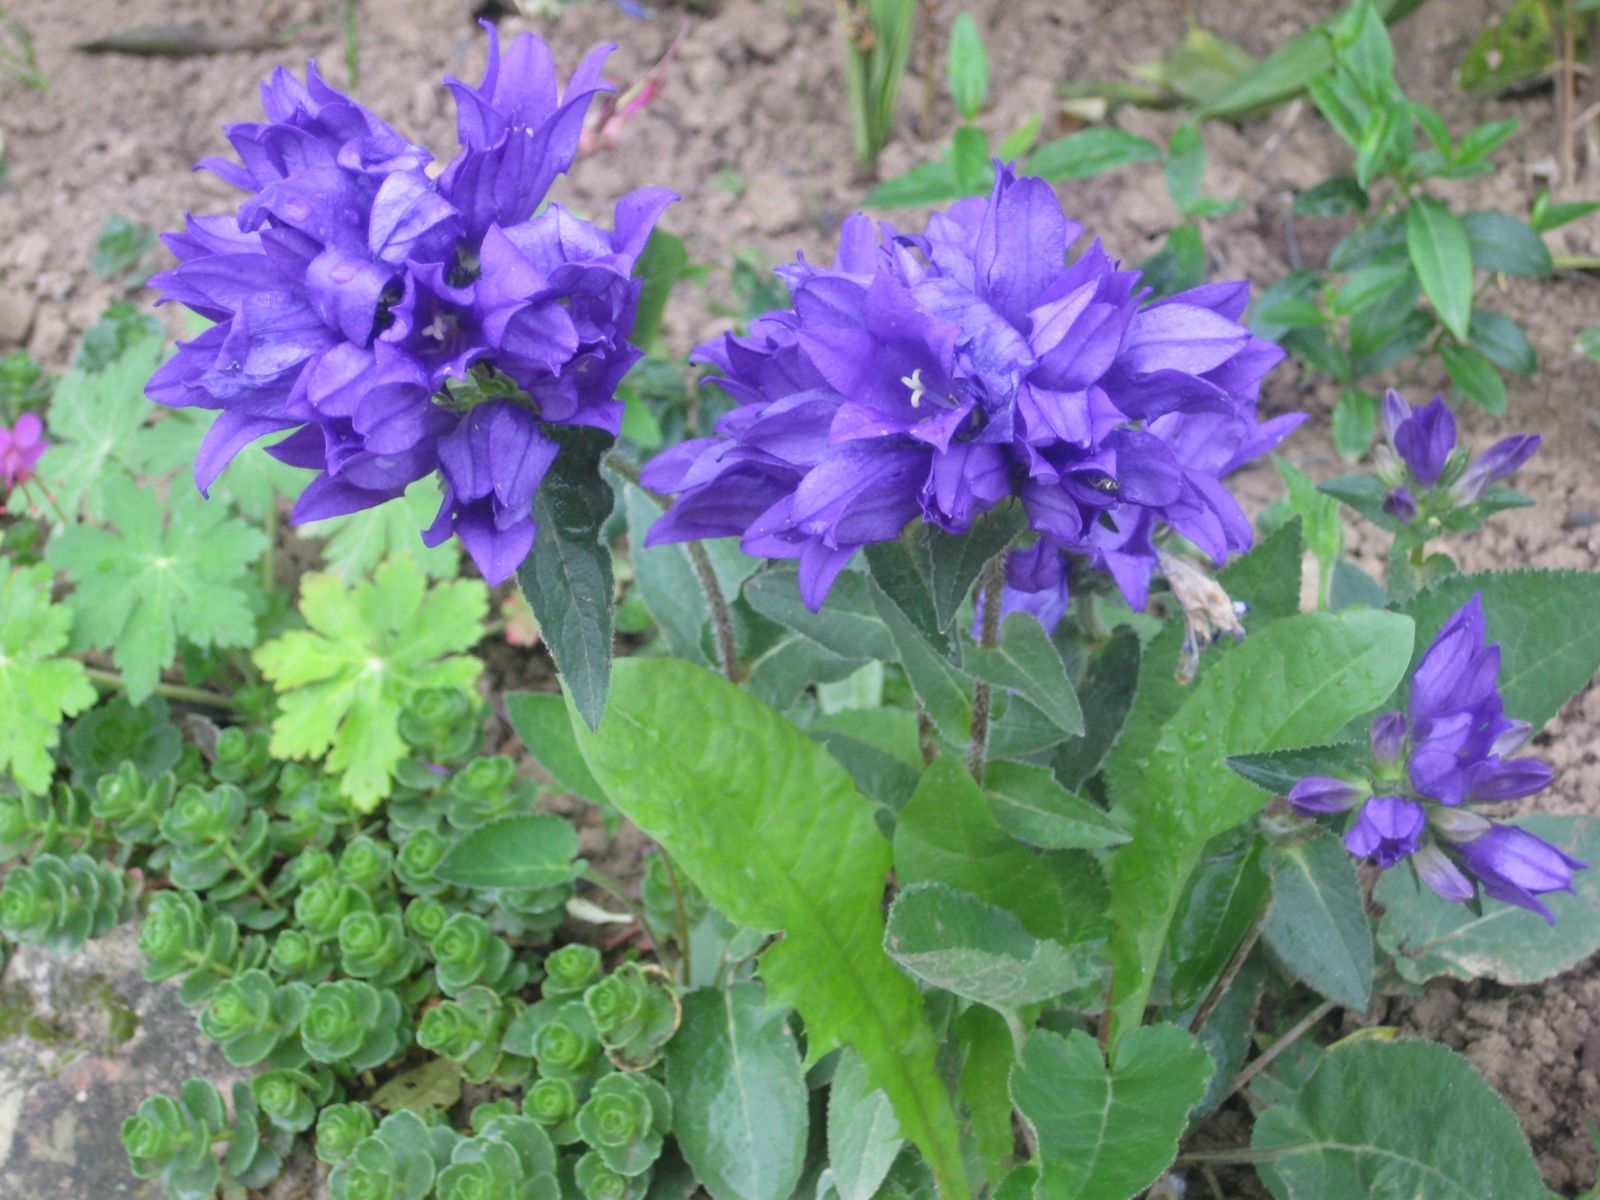 Centaurées, ajuga reptens, ancolies, iris germanica, campanula glomerata